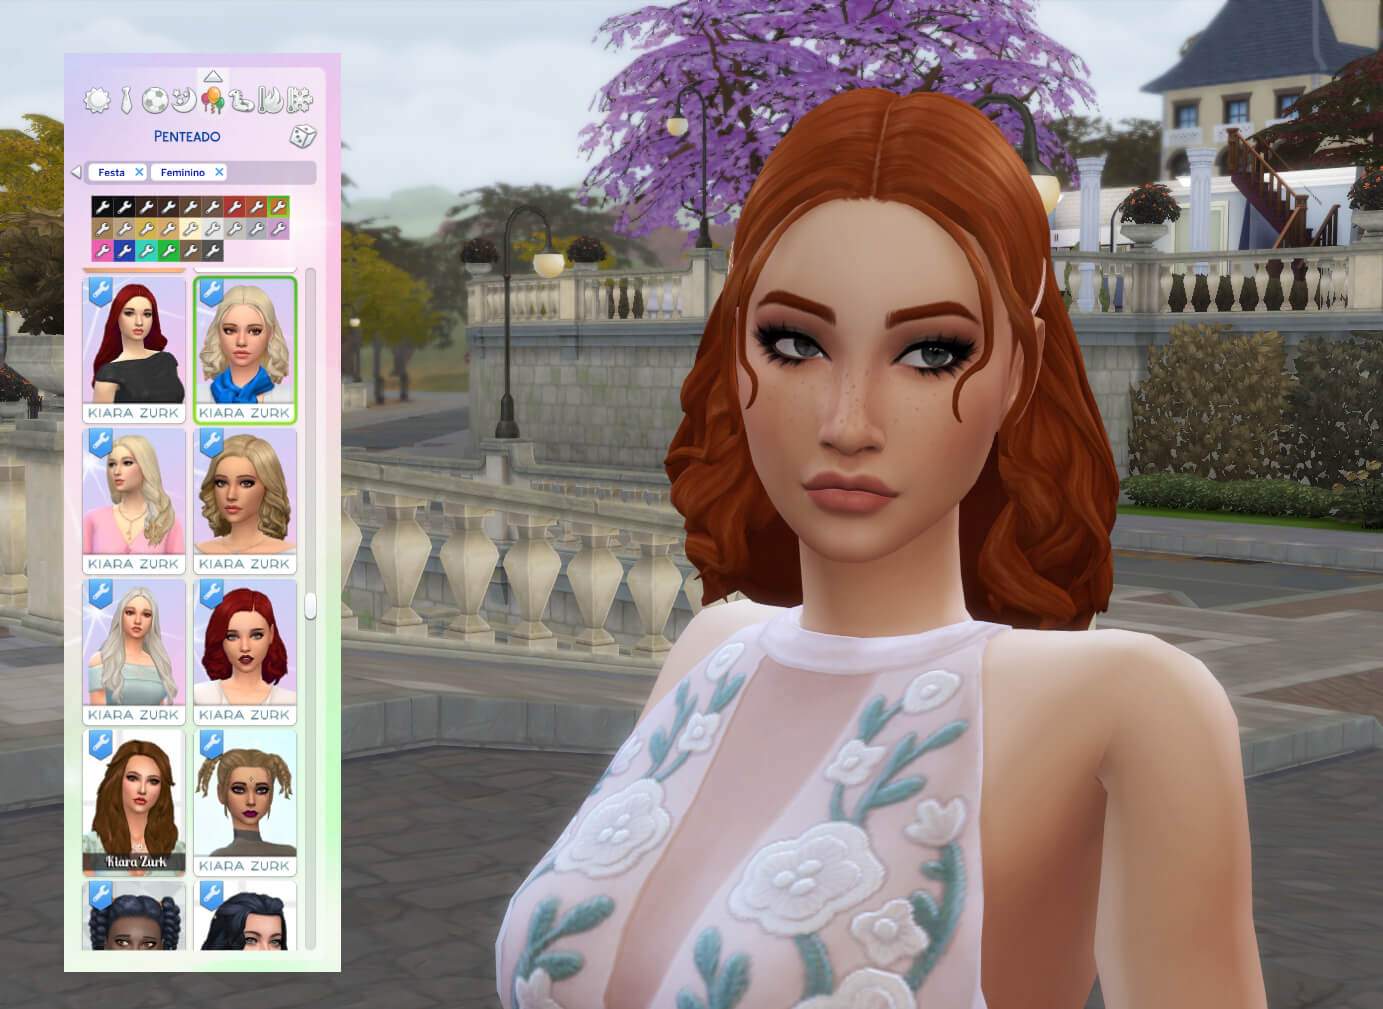 Natalia Hairstyle - The Sims 4 Create a Sim - CurseForge